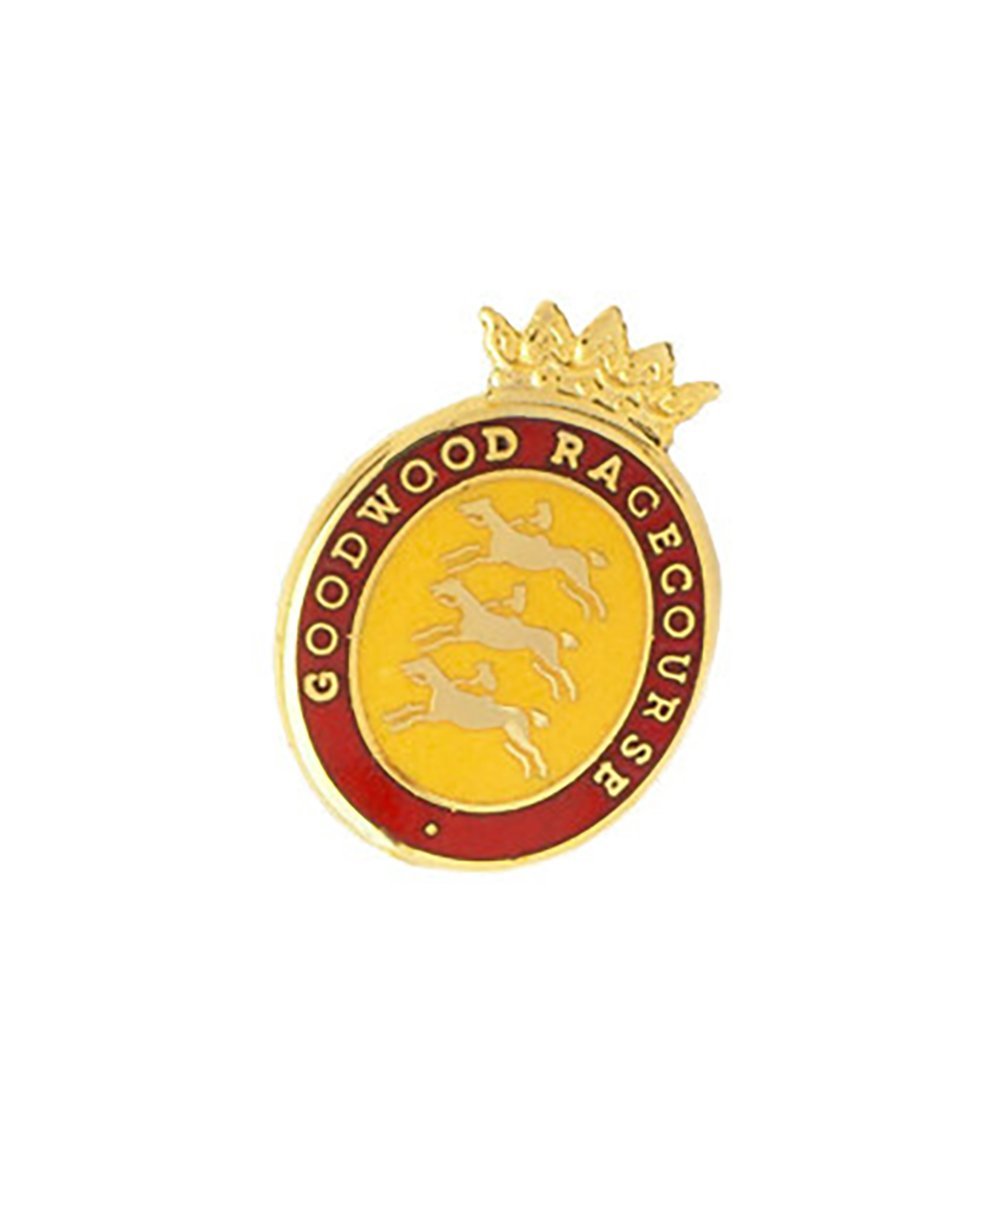 Goodwood Racecourse Stubbs Horses Enamel Pin Badge